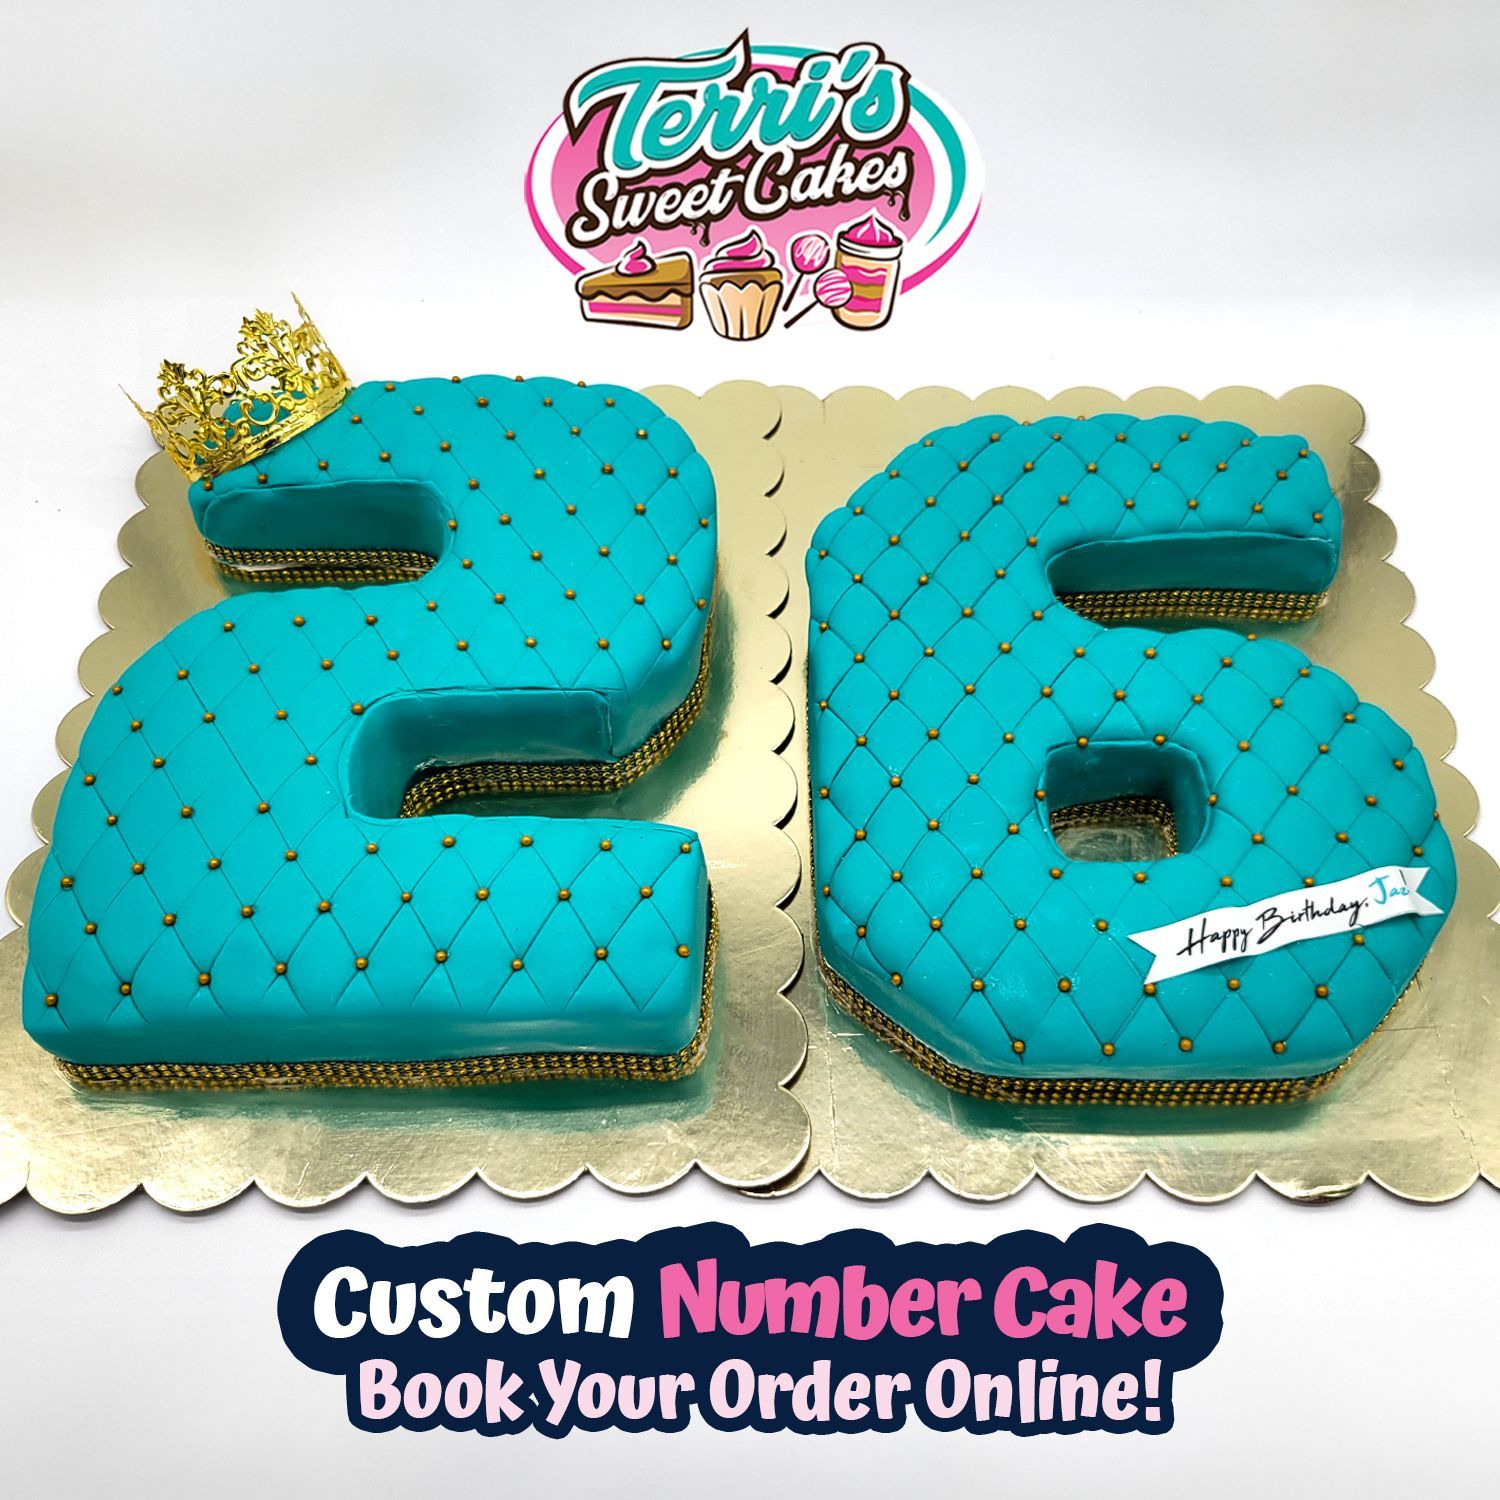 Custom Number Cake by Terri's Sweet Cakes!